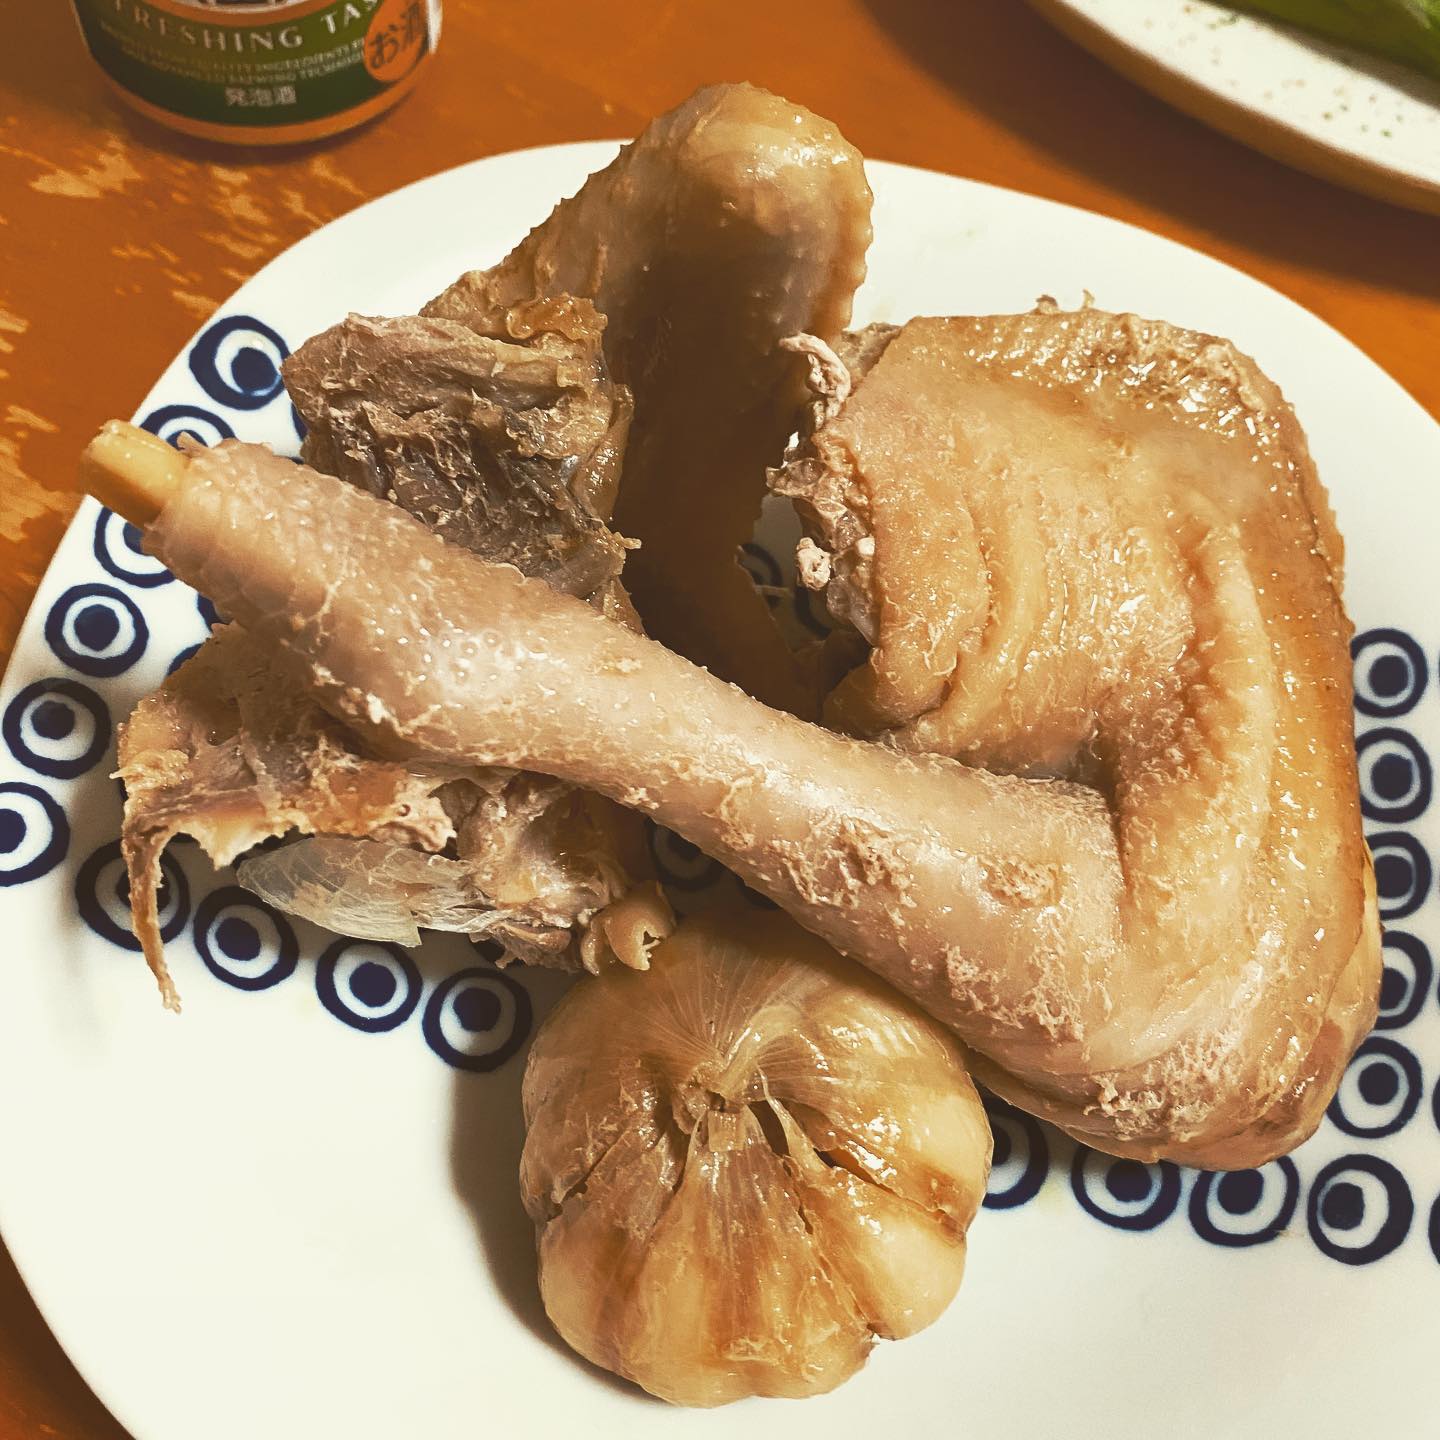 Yahoo!ショッピングの水郷のとりやさんで買った骨付き親鳥は、電気圧力鍋で煮てもなかなかの噛みごたえでした。肉肉しかったです。https://store.shopping.yahoo.co.jp/suigodori/yotiwari-y.html#yahooショッピング #水郷のとりやさん #骨付き鶏 #鶏肉 #家飲み#うち飲み#電気圧力鍋#親鳥 #お取り寄せ #お取り寄せグルメ